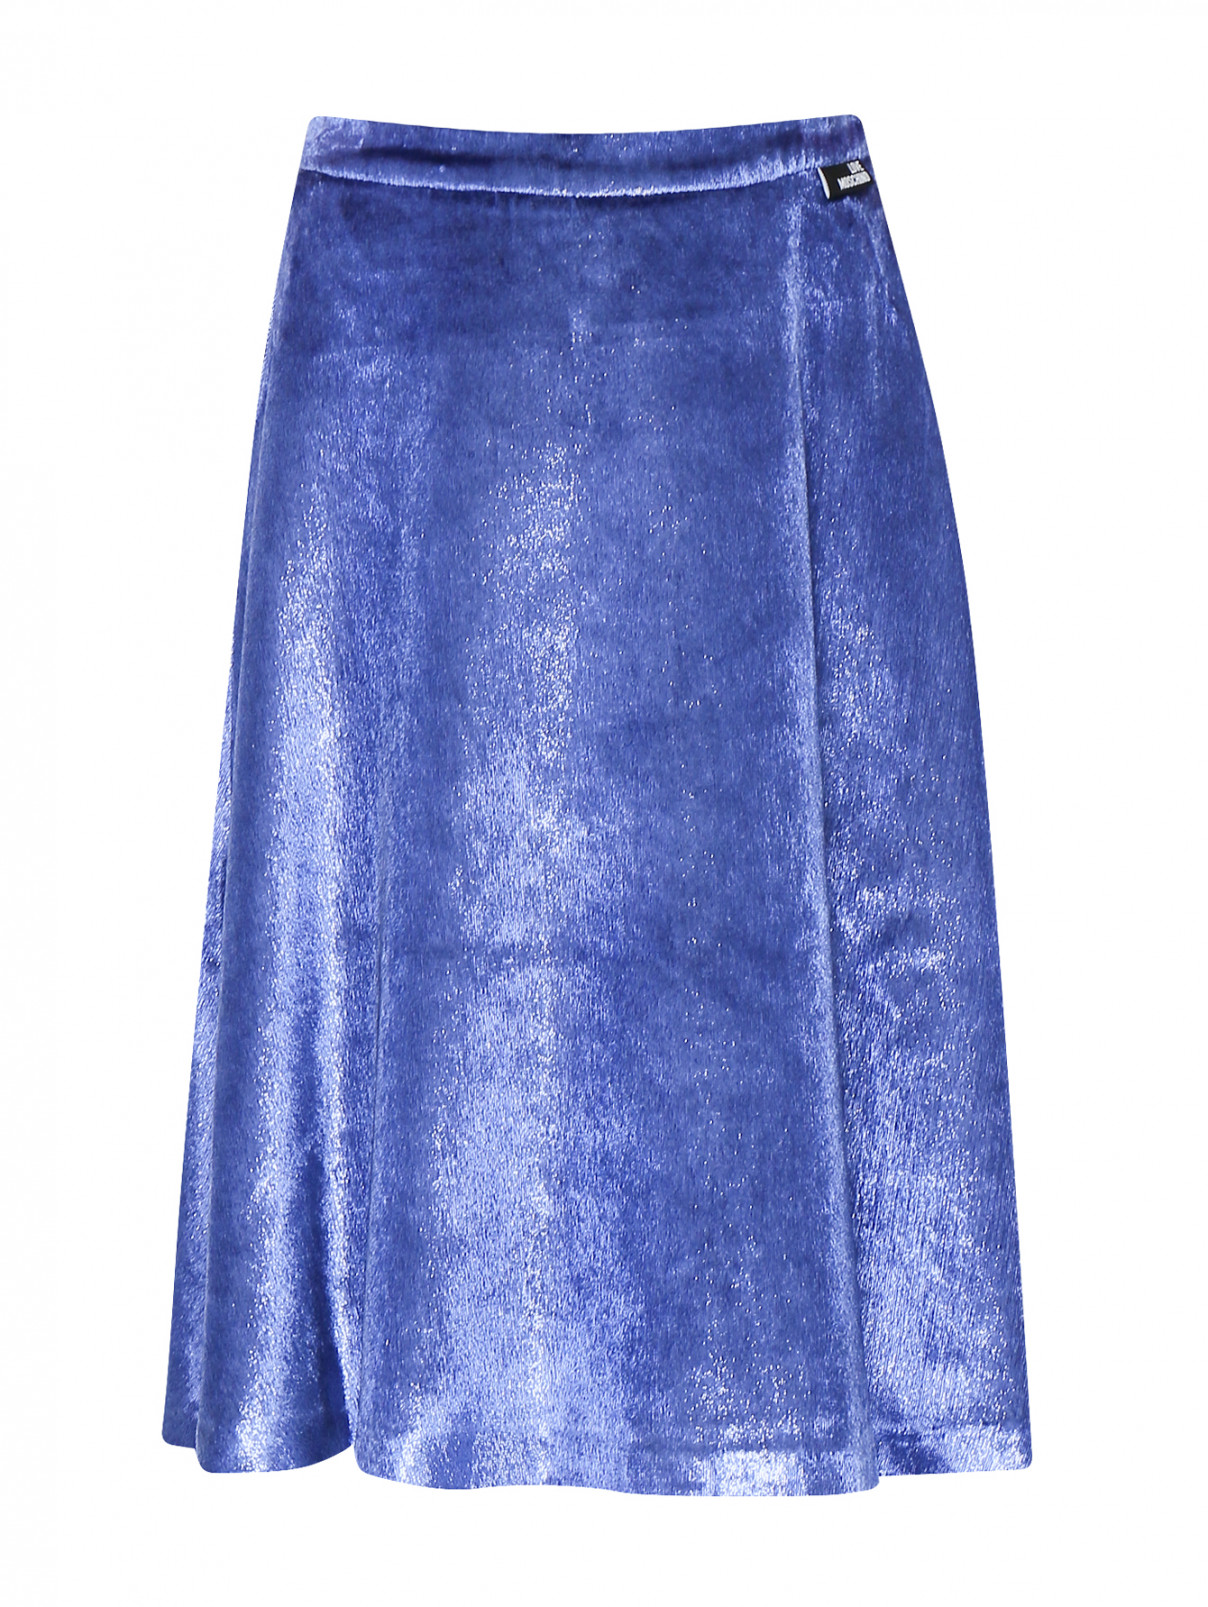 Юбка-миди из фактурной ткани Love Moschino  –  Общий вид  – Цвет:  Синий